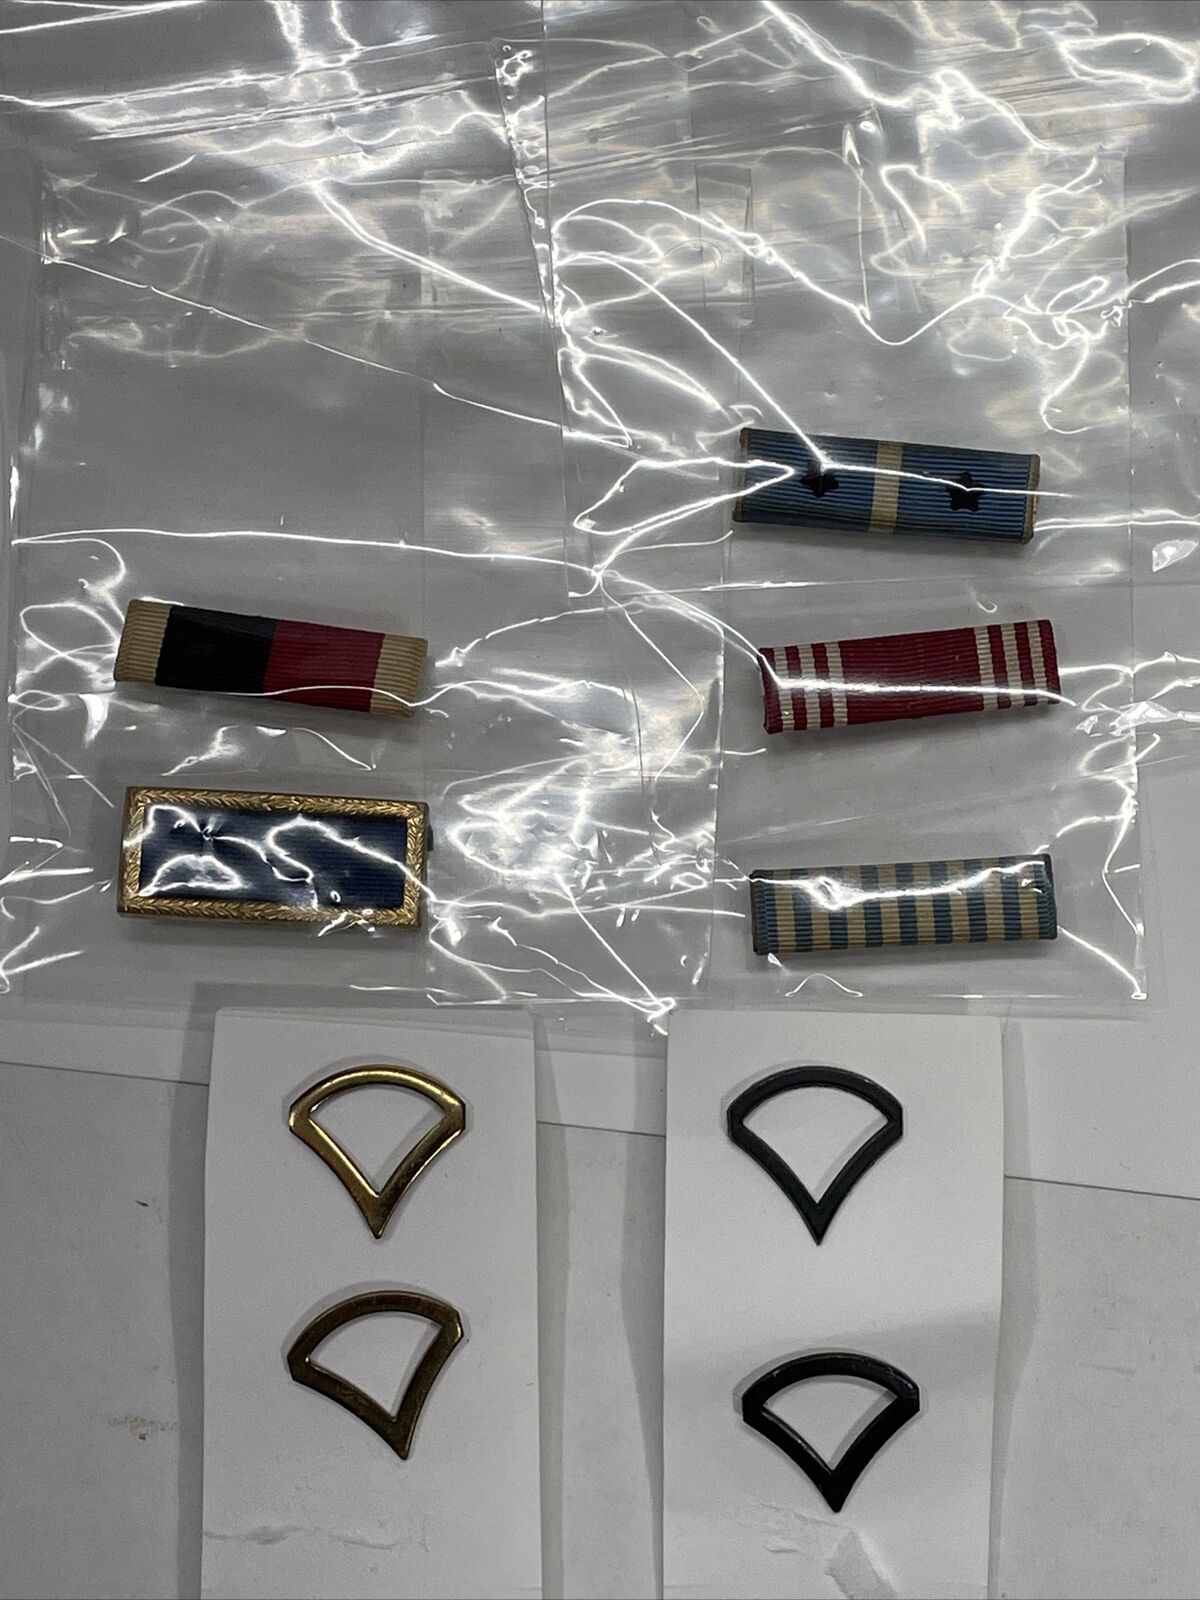 Lot of 9 Vintage Military Pins Army USUniform Collar Ranks Conduct Citation etc